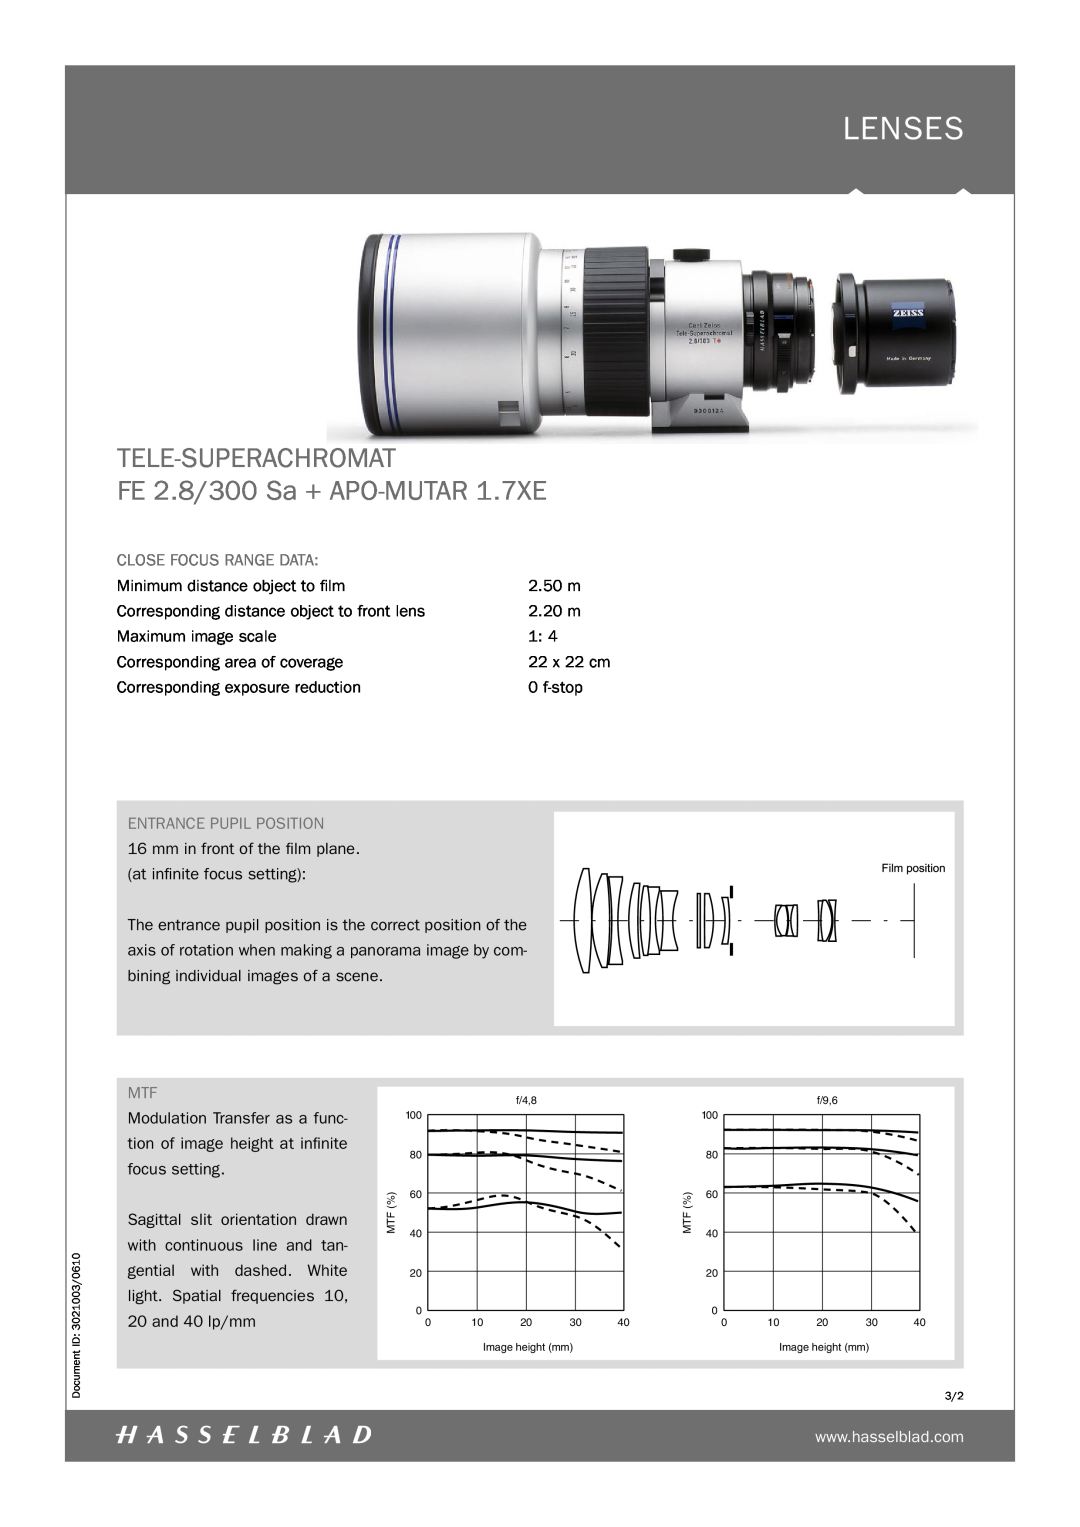 Hasselblad TELE-SUPERACHROMAT FE 2.8/300 Sa + APO-MUTAR 1.7XE, Entrance Pupil Position, Lenses, Close Focus Range Data 